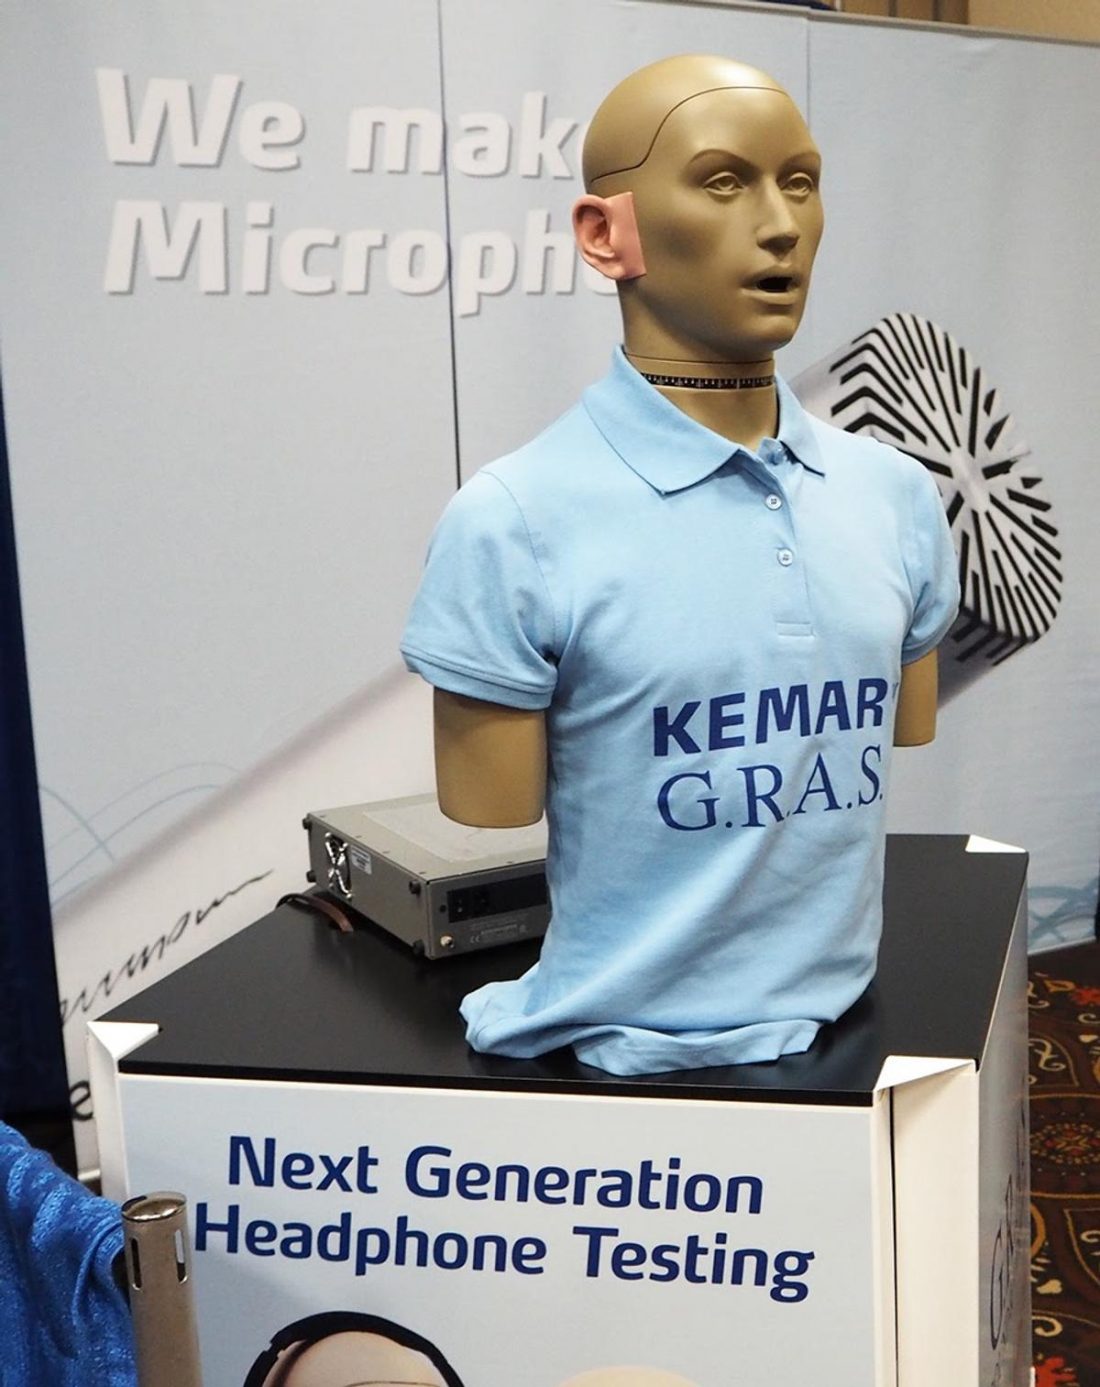 The GRAS KEMAR Head and Torso Simulator. (From audioxpress.com.jpg)